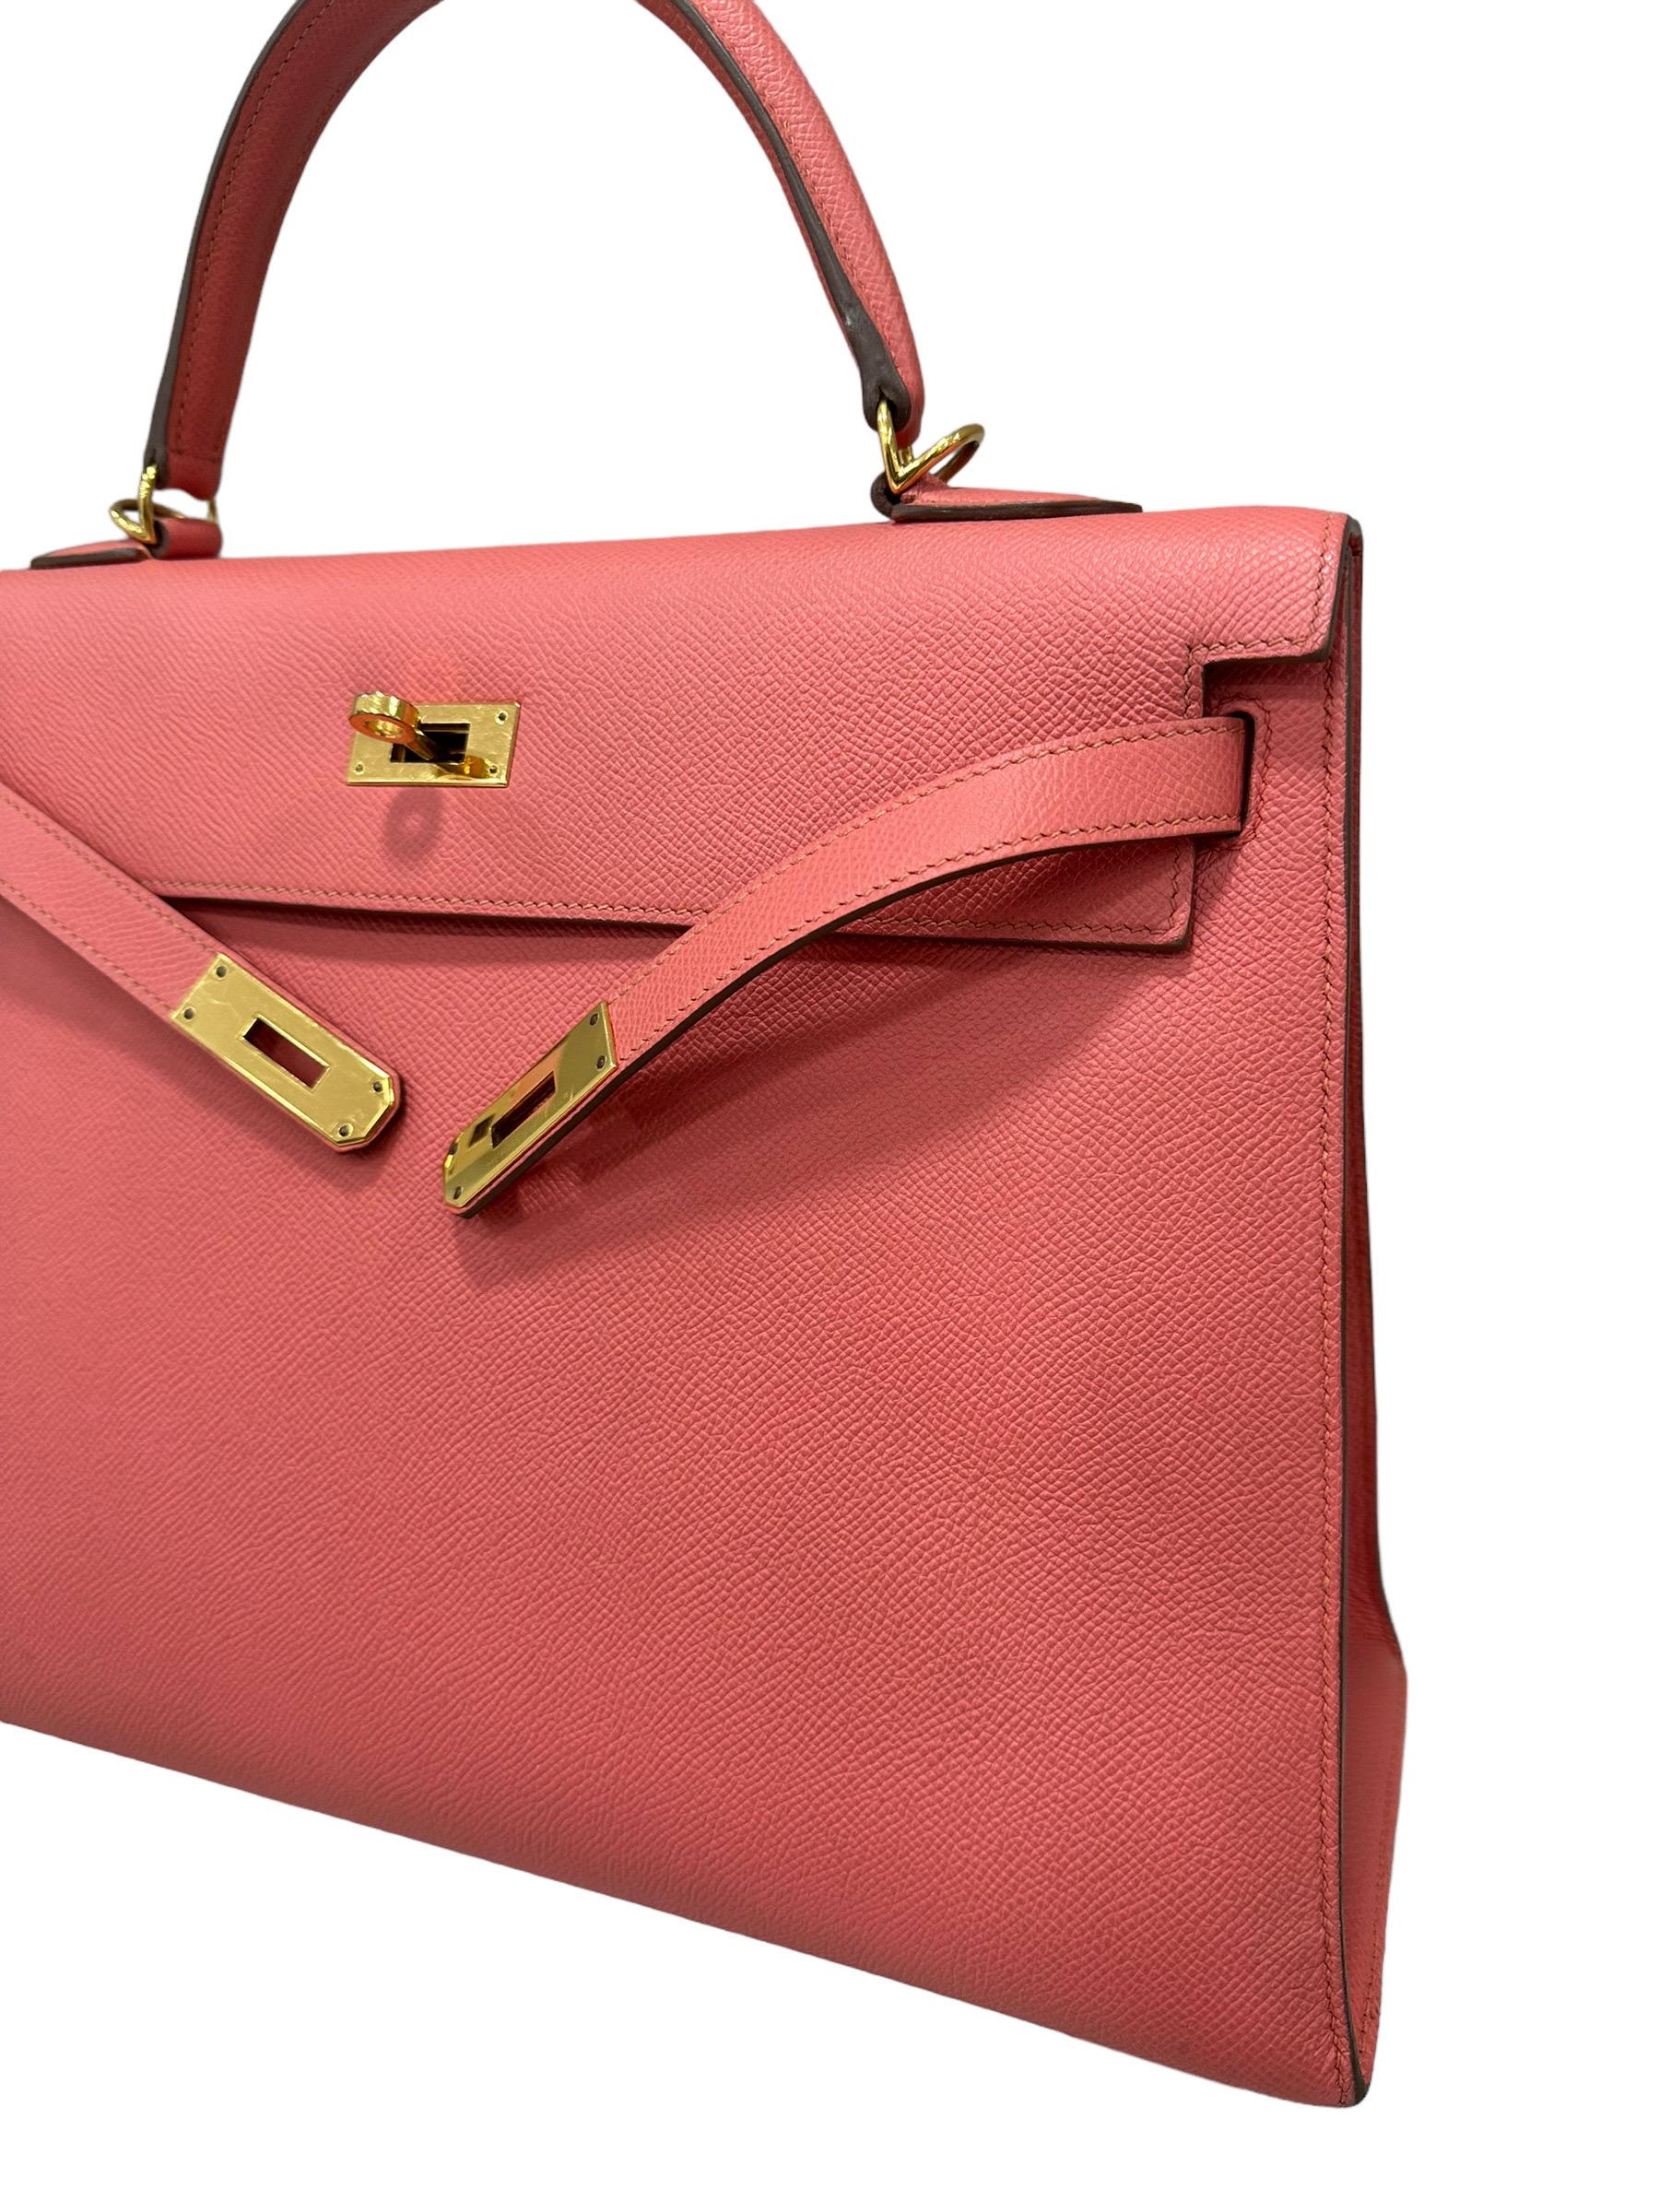 Hermès Kelly 35 Epsom Rose Jaipur Top Handle Bag 3